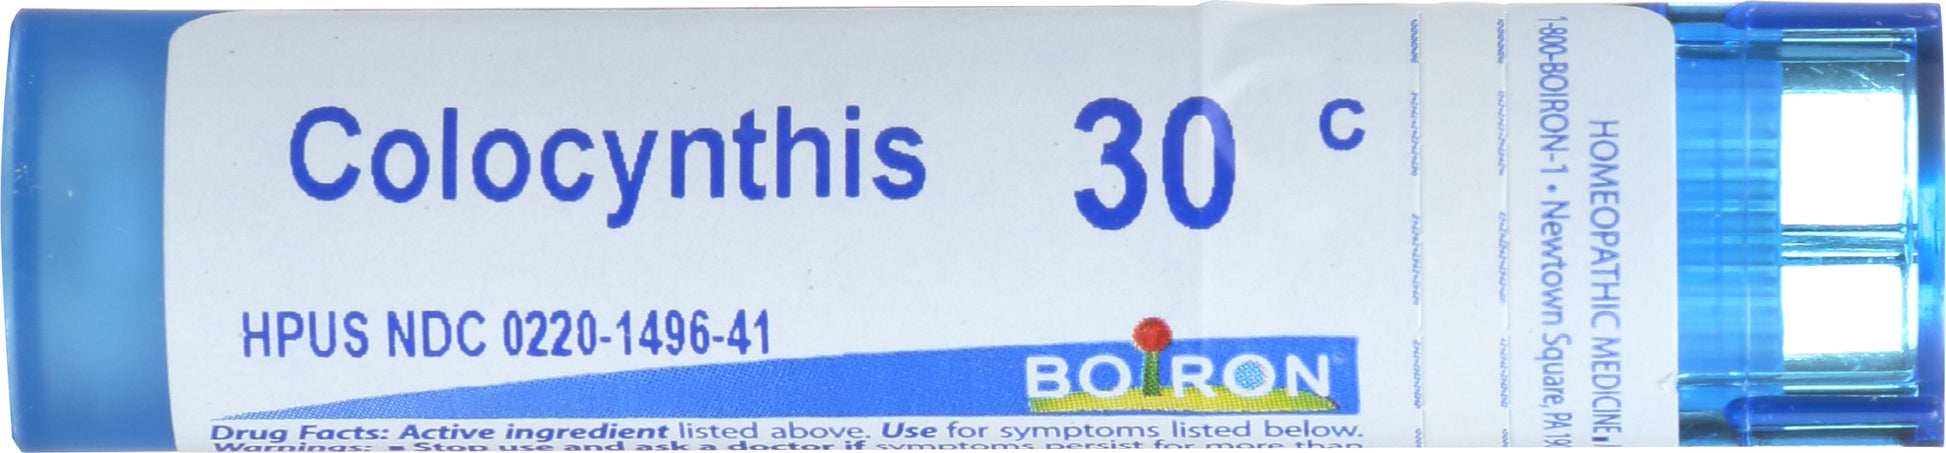 Boiron Colocynthis 30c